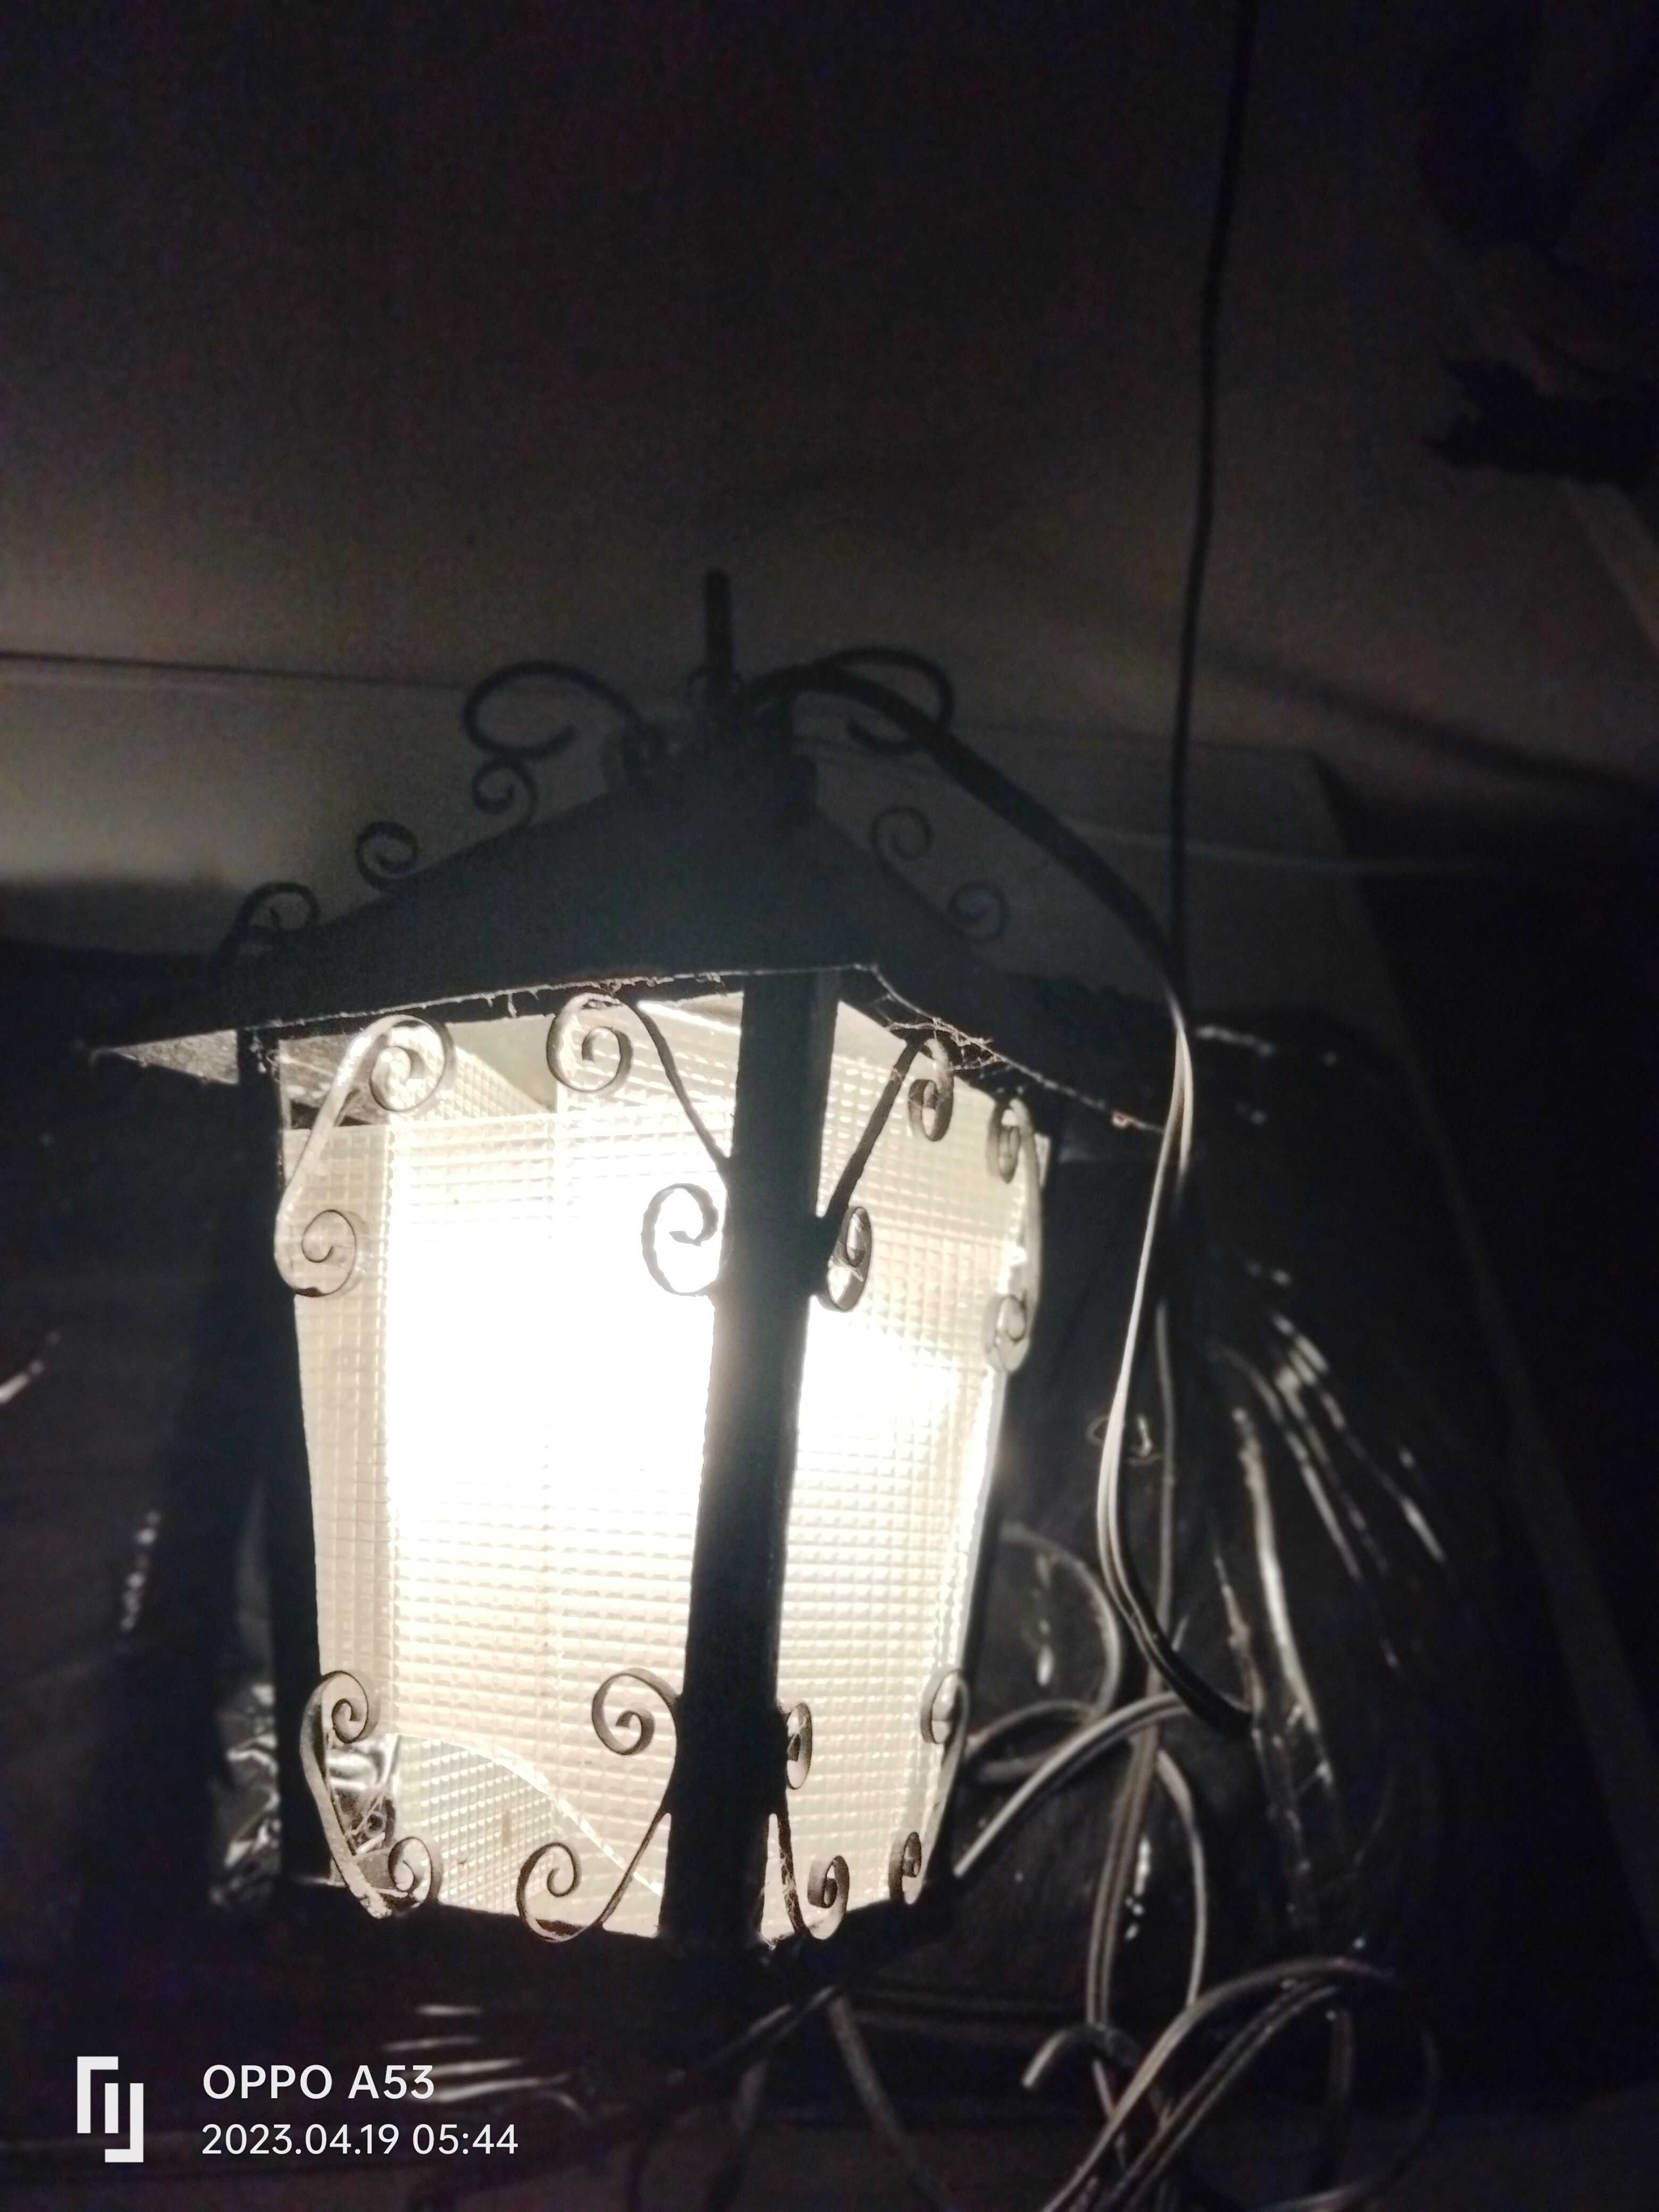 Lampa/latarenka RETRO-metaloplastyka-wczesny PRL